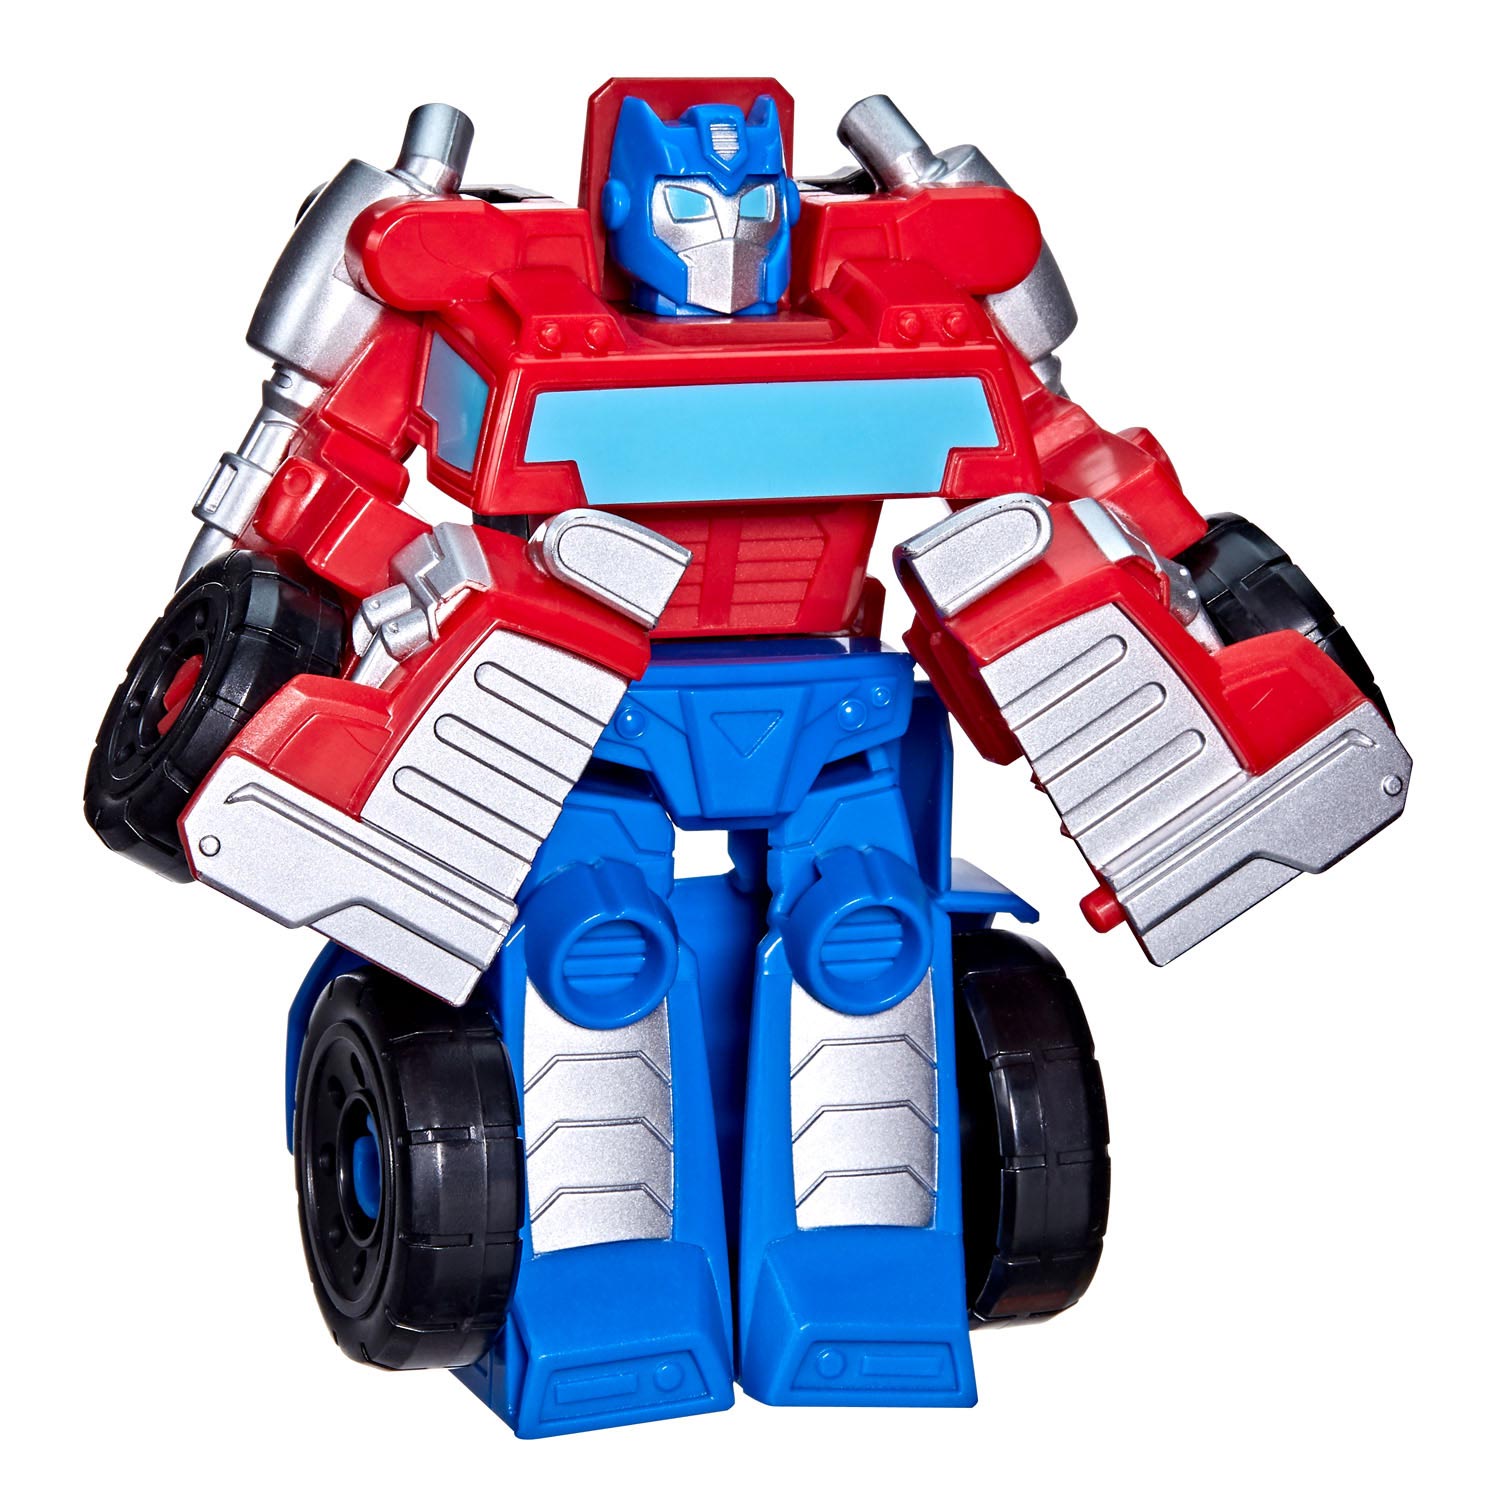 Hasbro Transformers Rescue Bots Academy Optimus Prime Top Merken Winkel